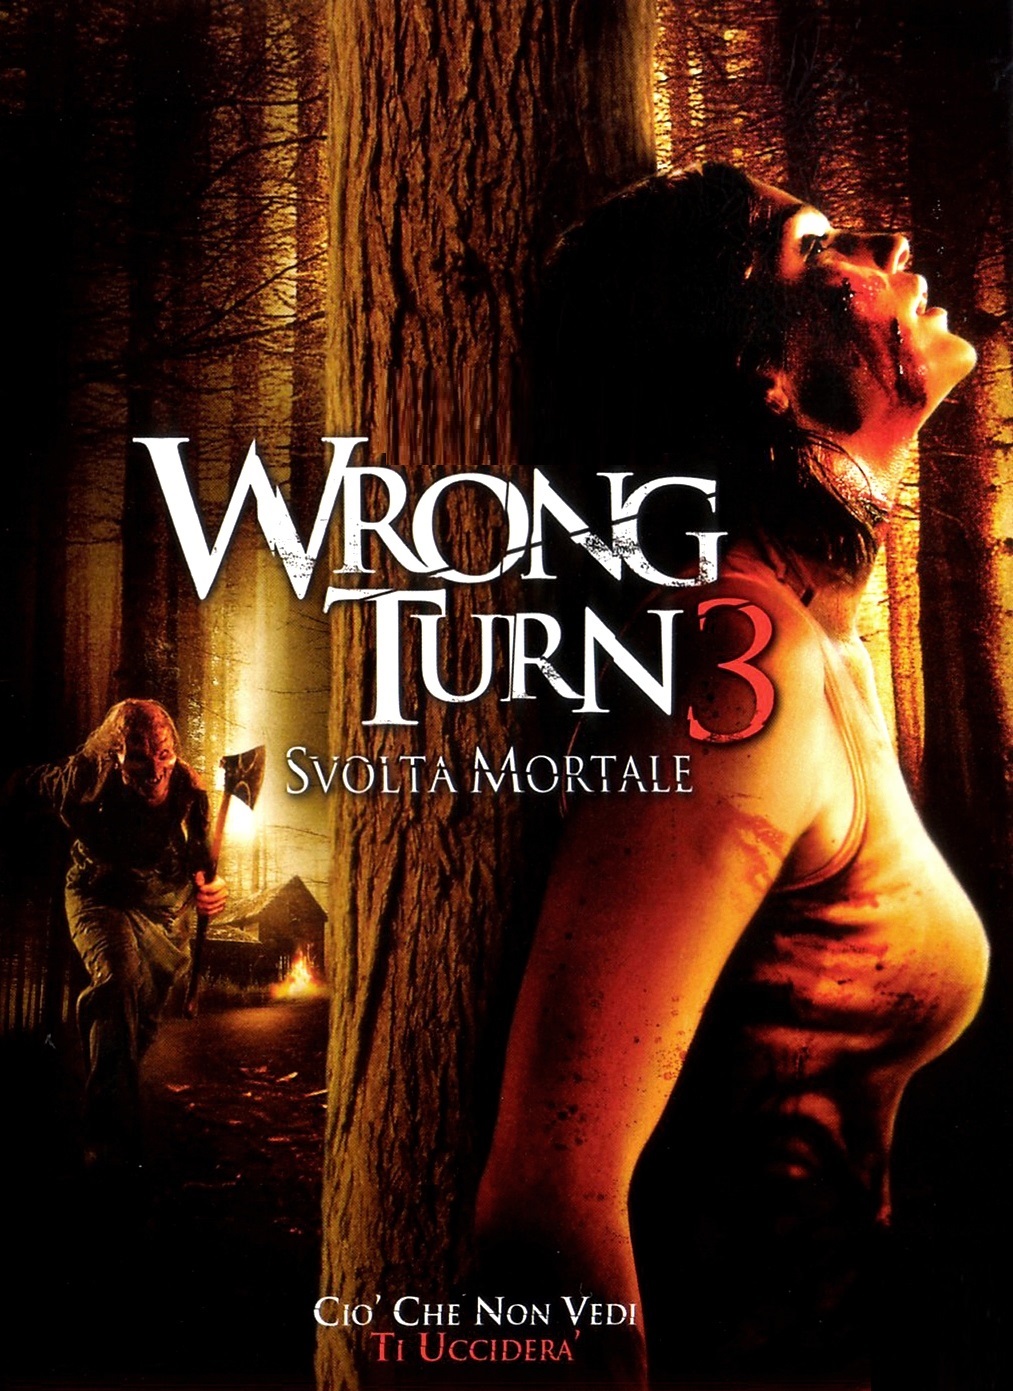 Wrong Turn 3: Svolta mortale [HD] (2009)